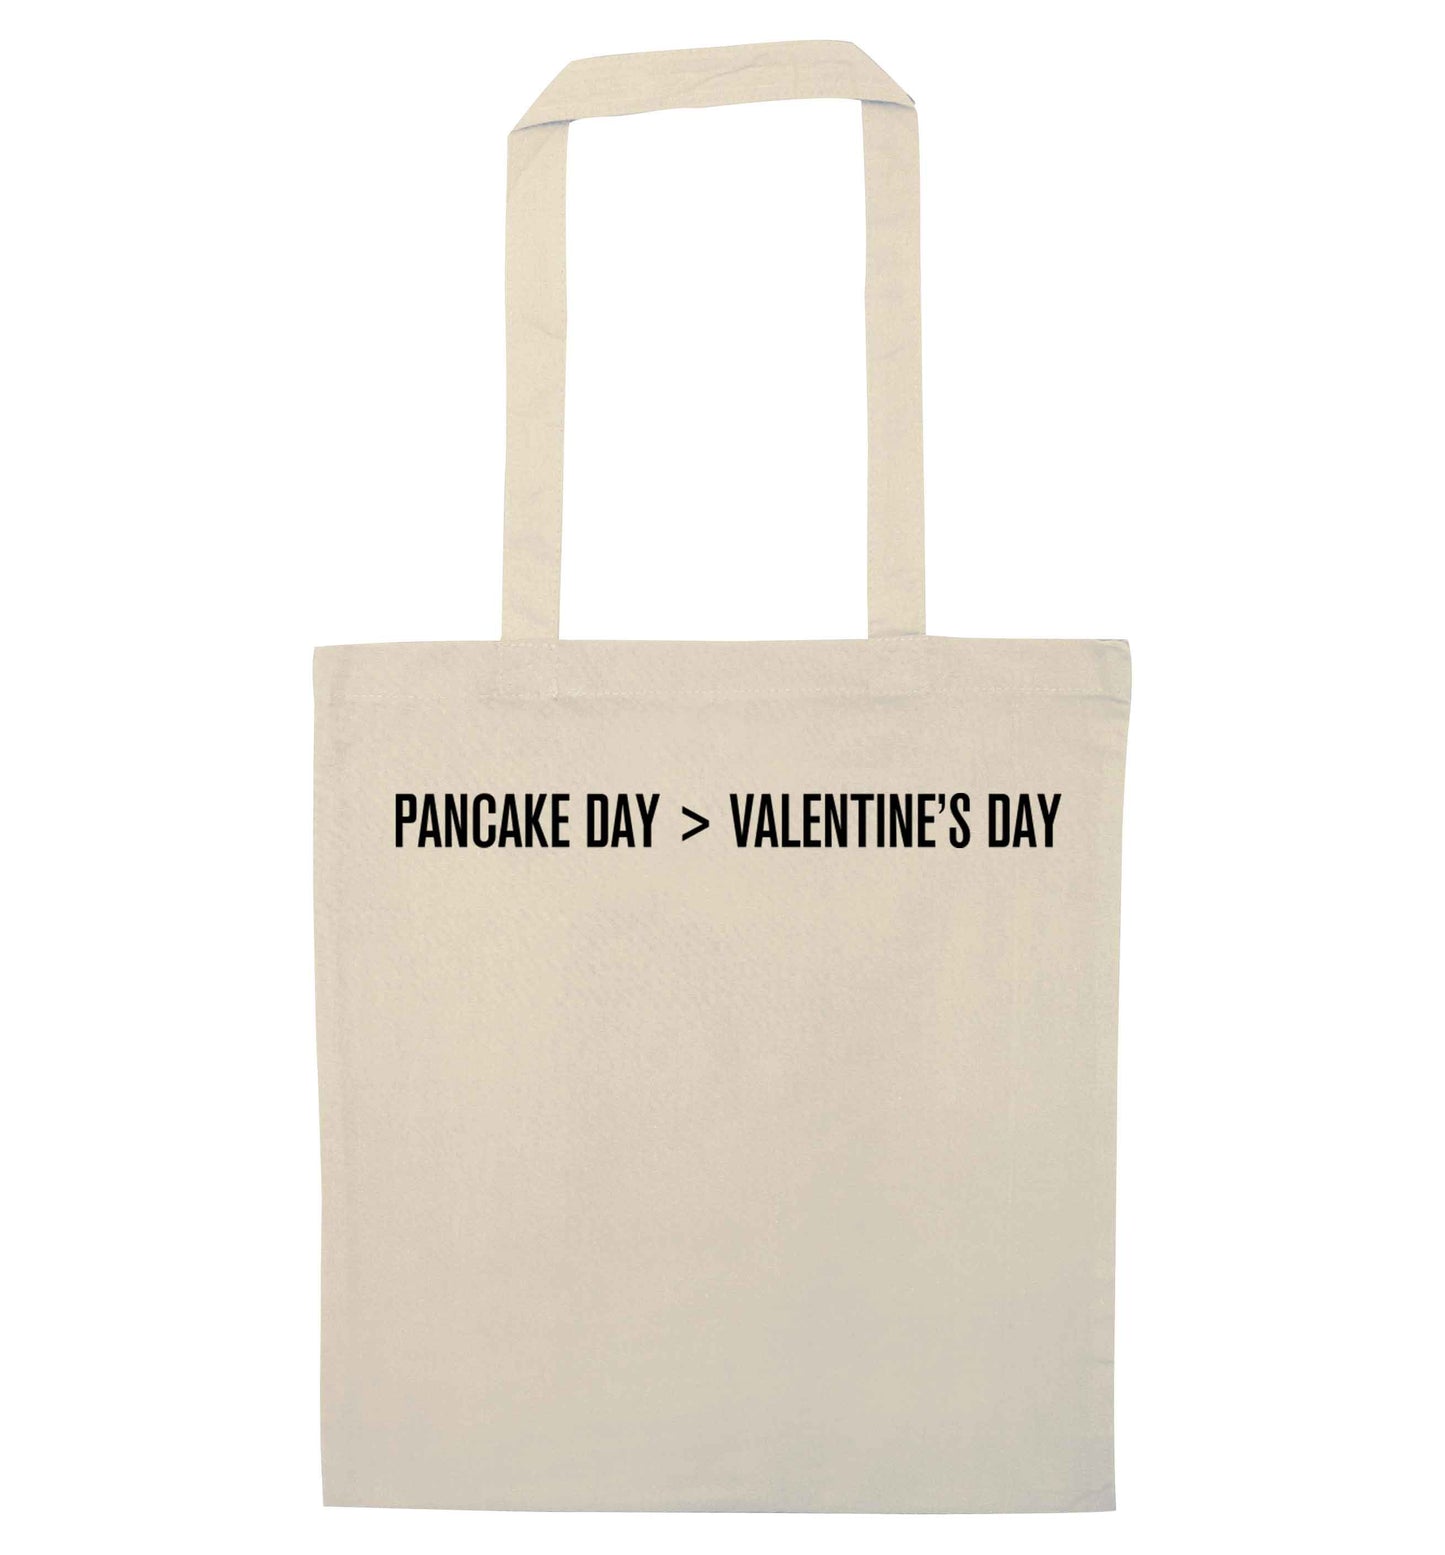 Pancake day > valentines day natural tote bag